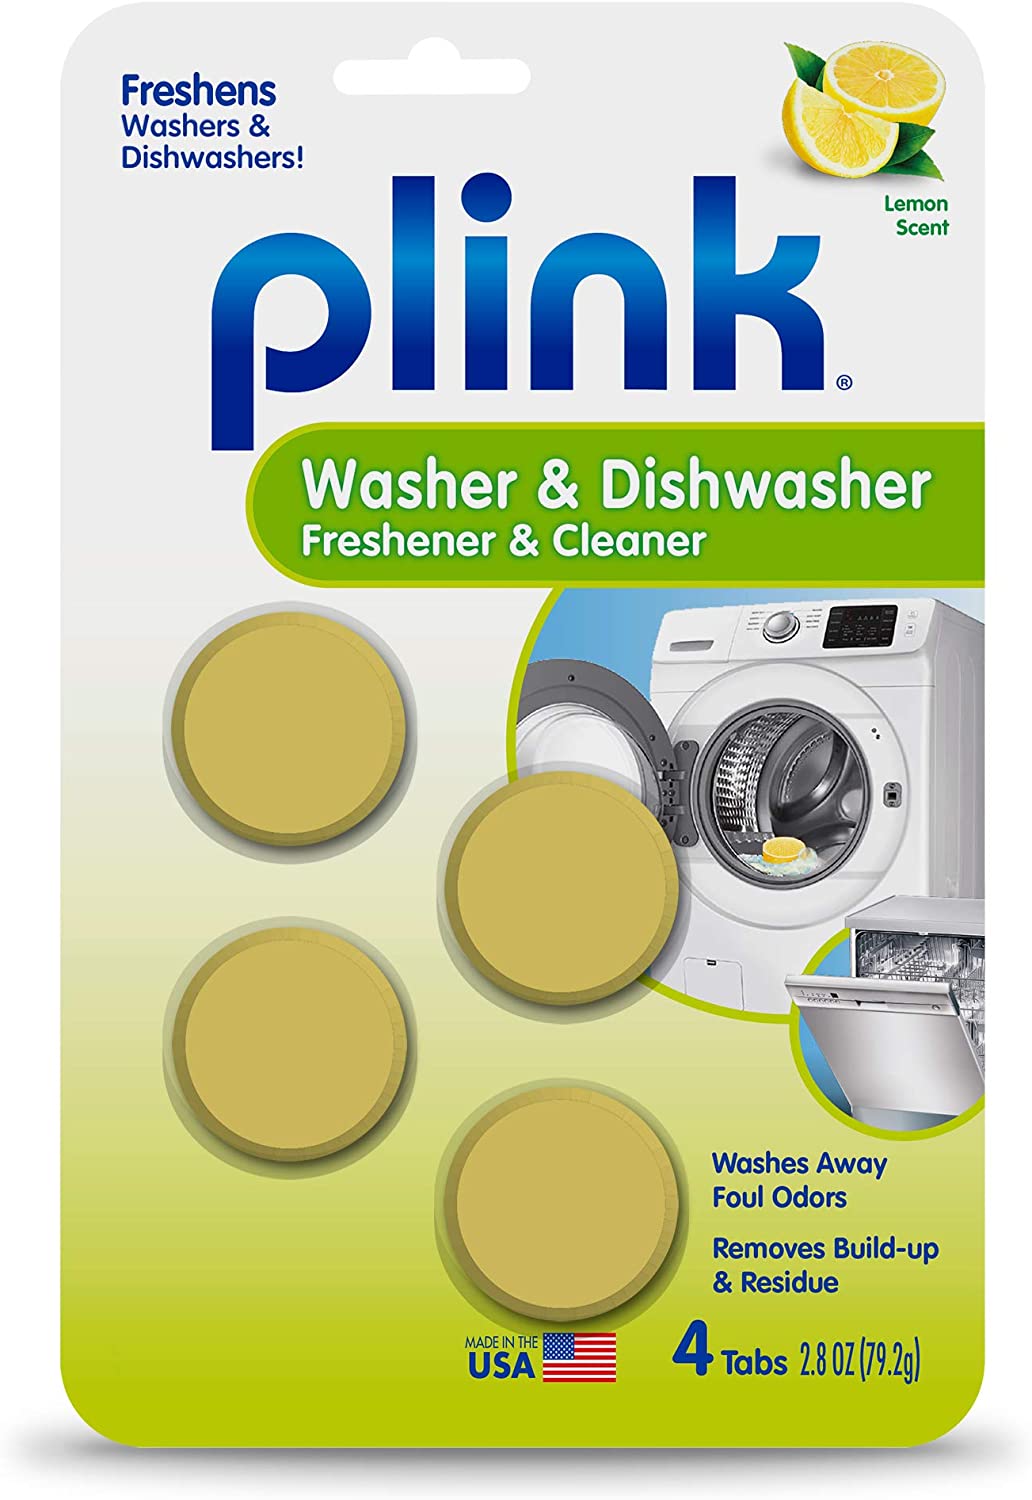 Plink: Washer & Dishwasher